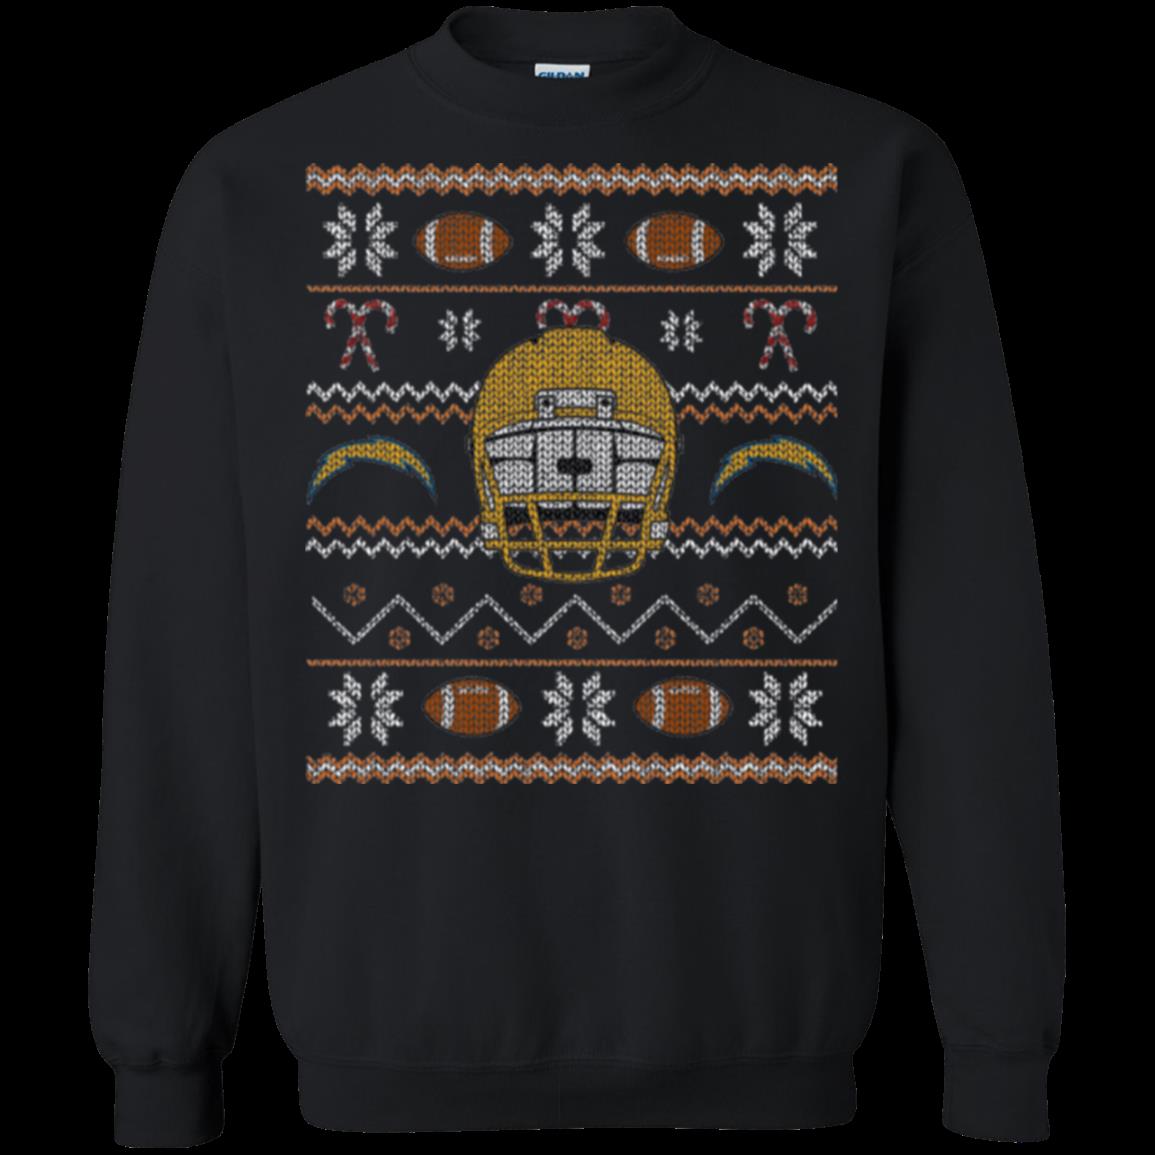 Los Angeles Chargers Ugly Christmas Sweaters T Shirt Hoodies Sweatshirt